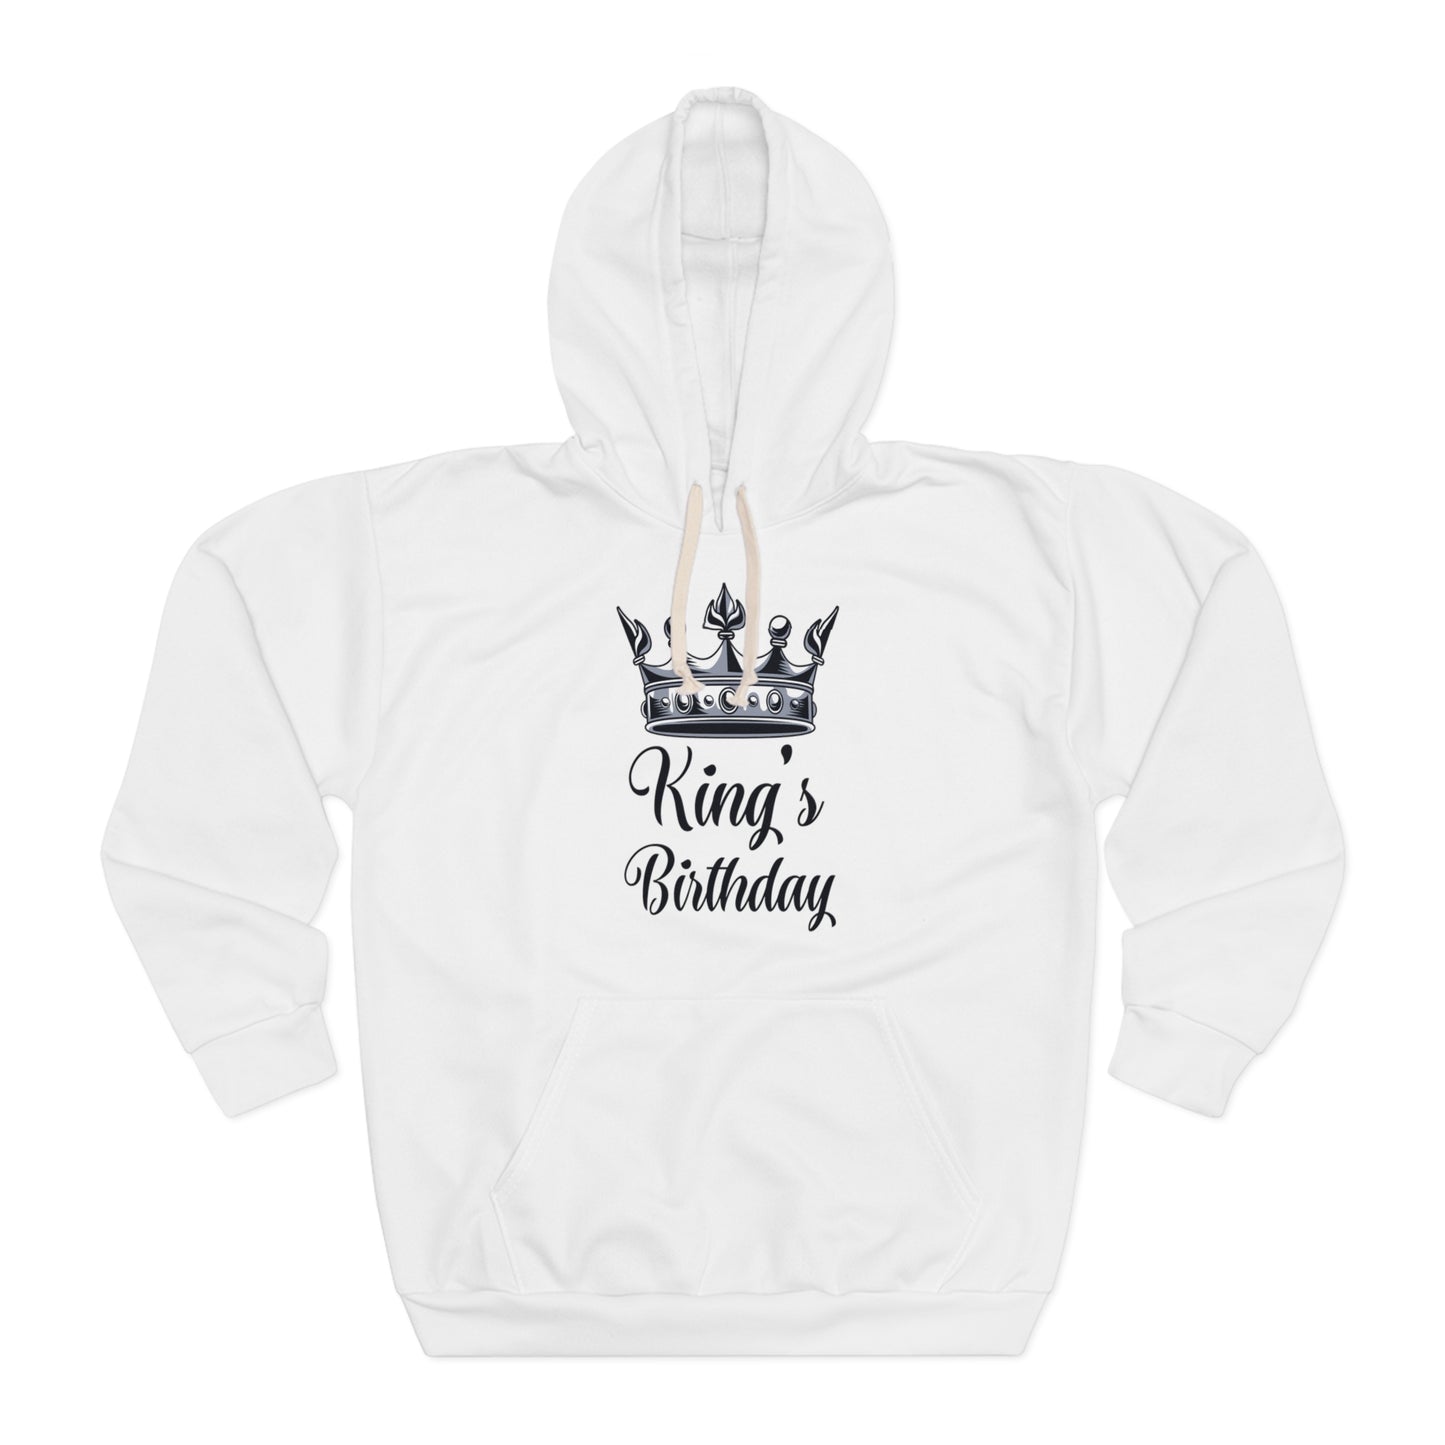 King's birthday - Unisex Pullover Hoodie